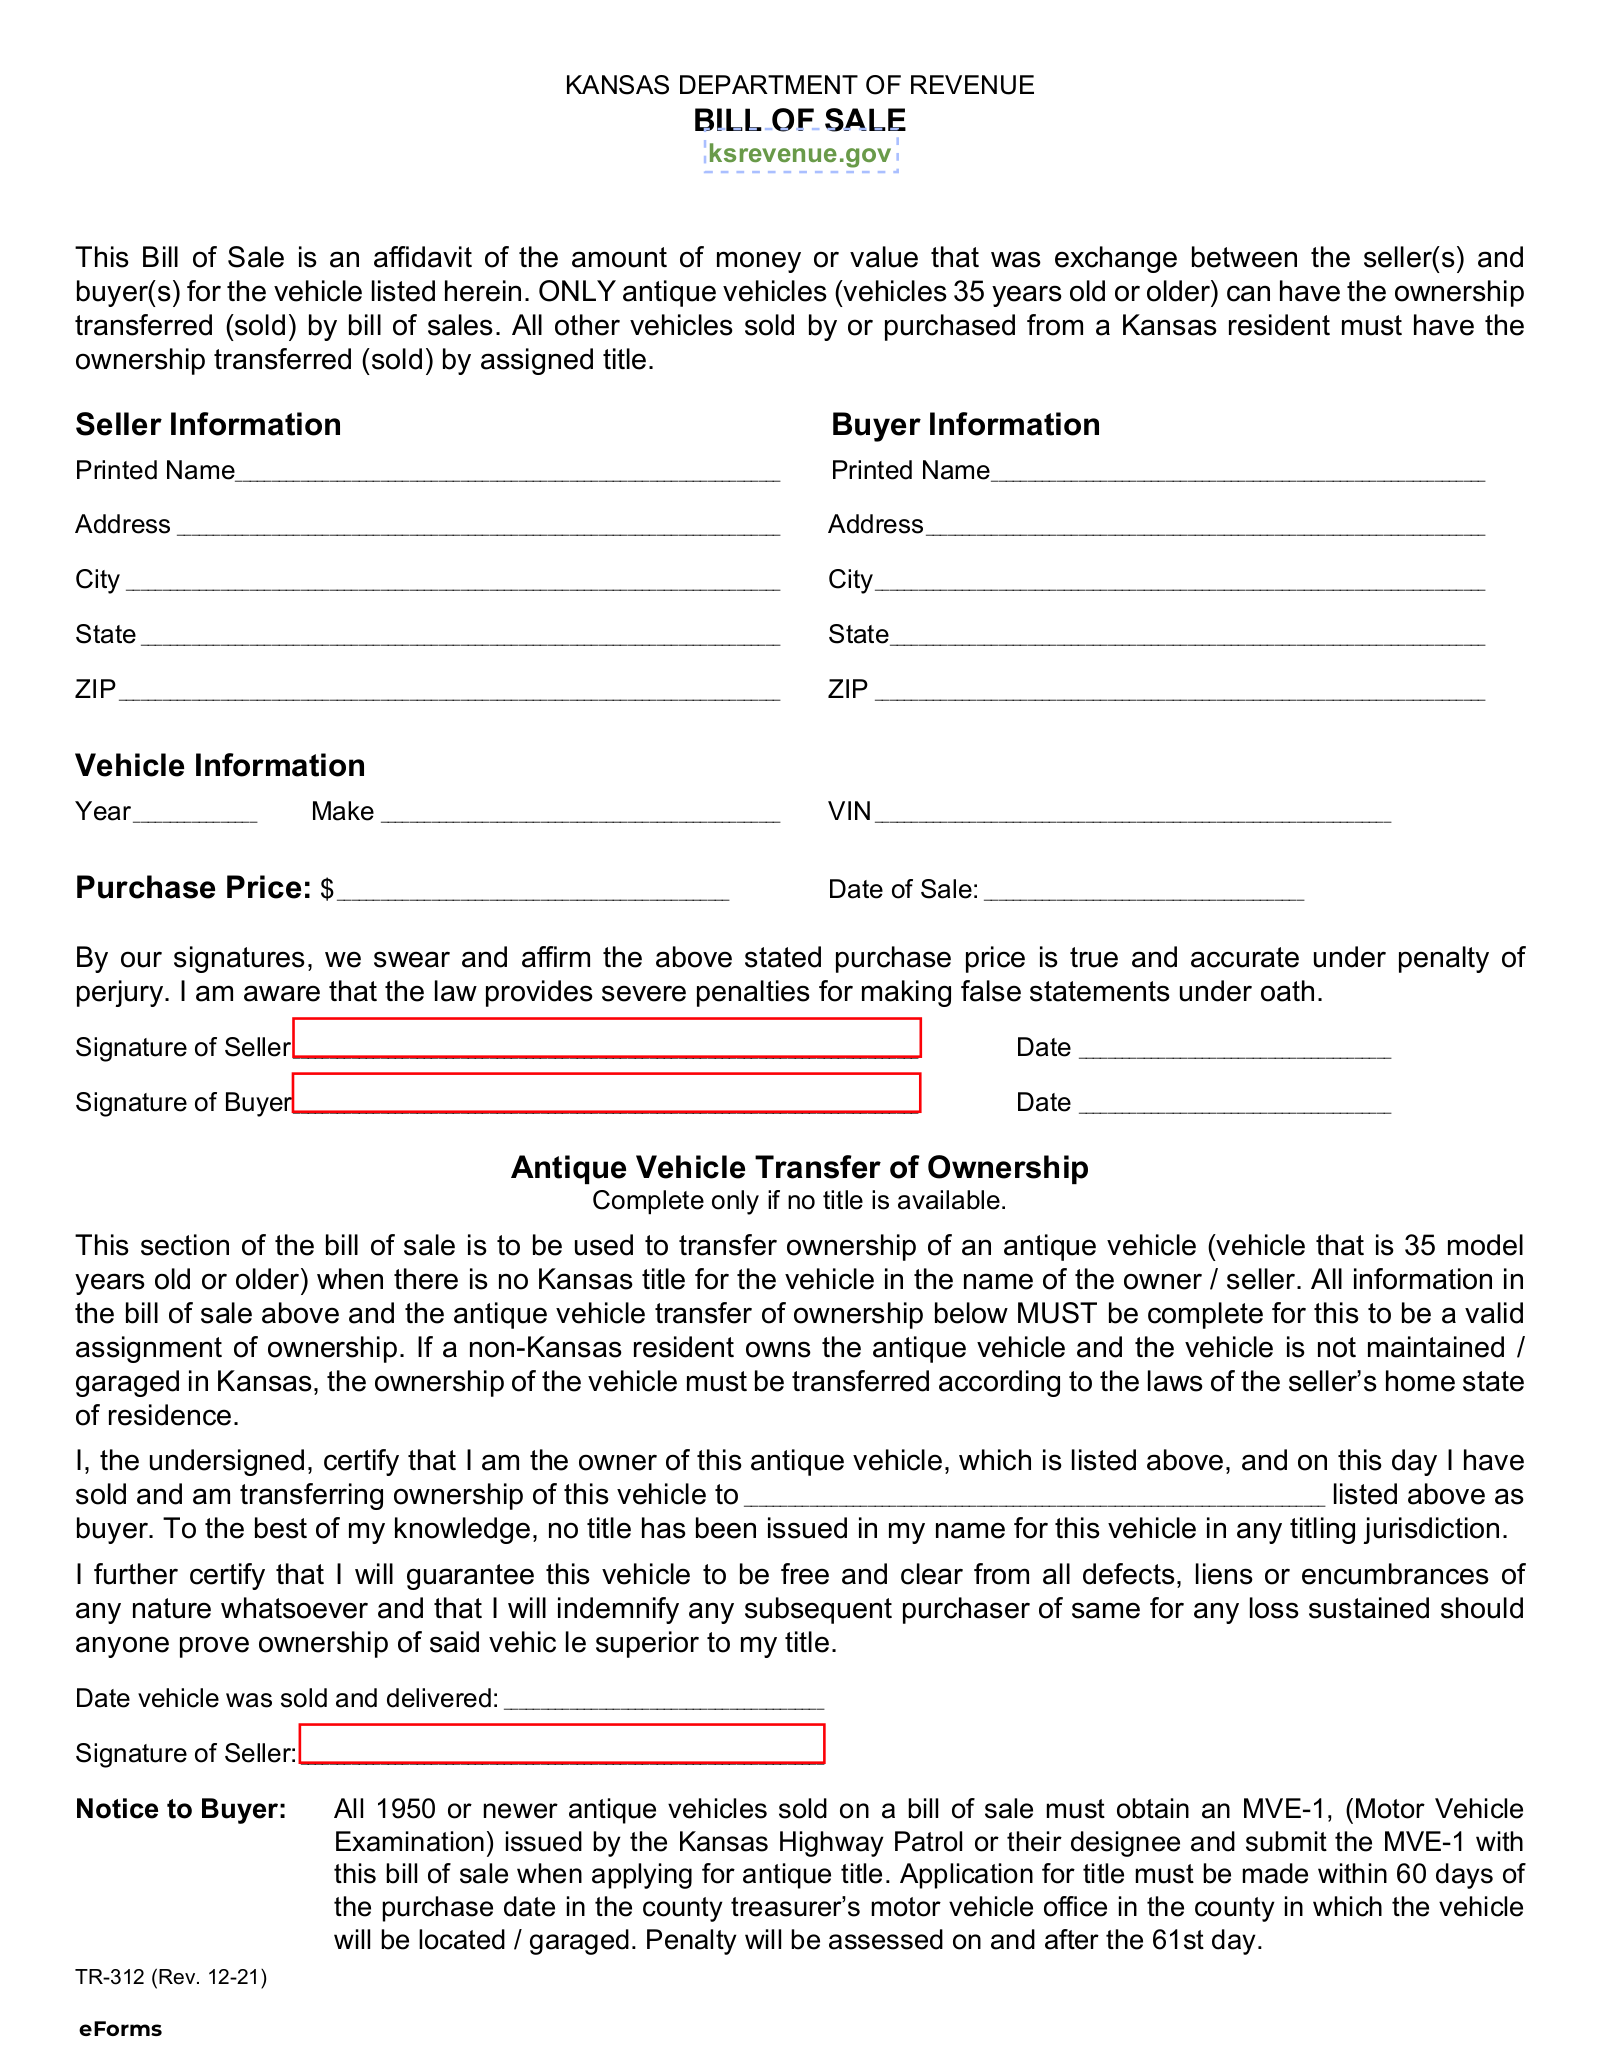 free-kansas-bill-of-sale-forms-pdf-eforms